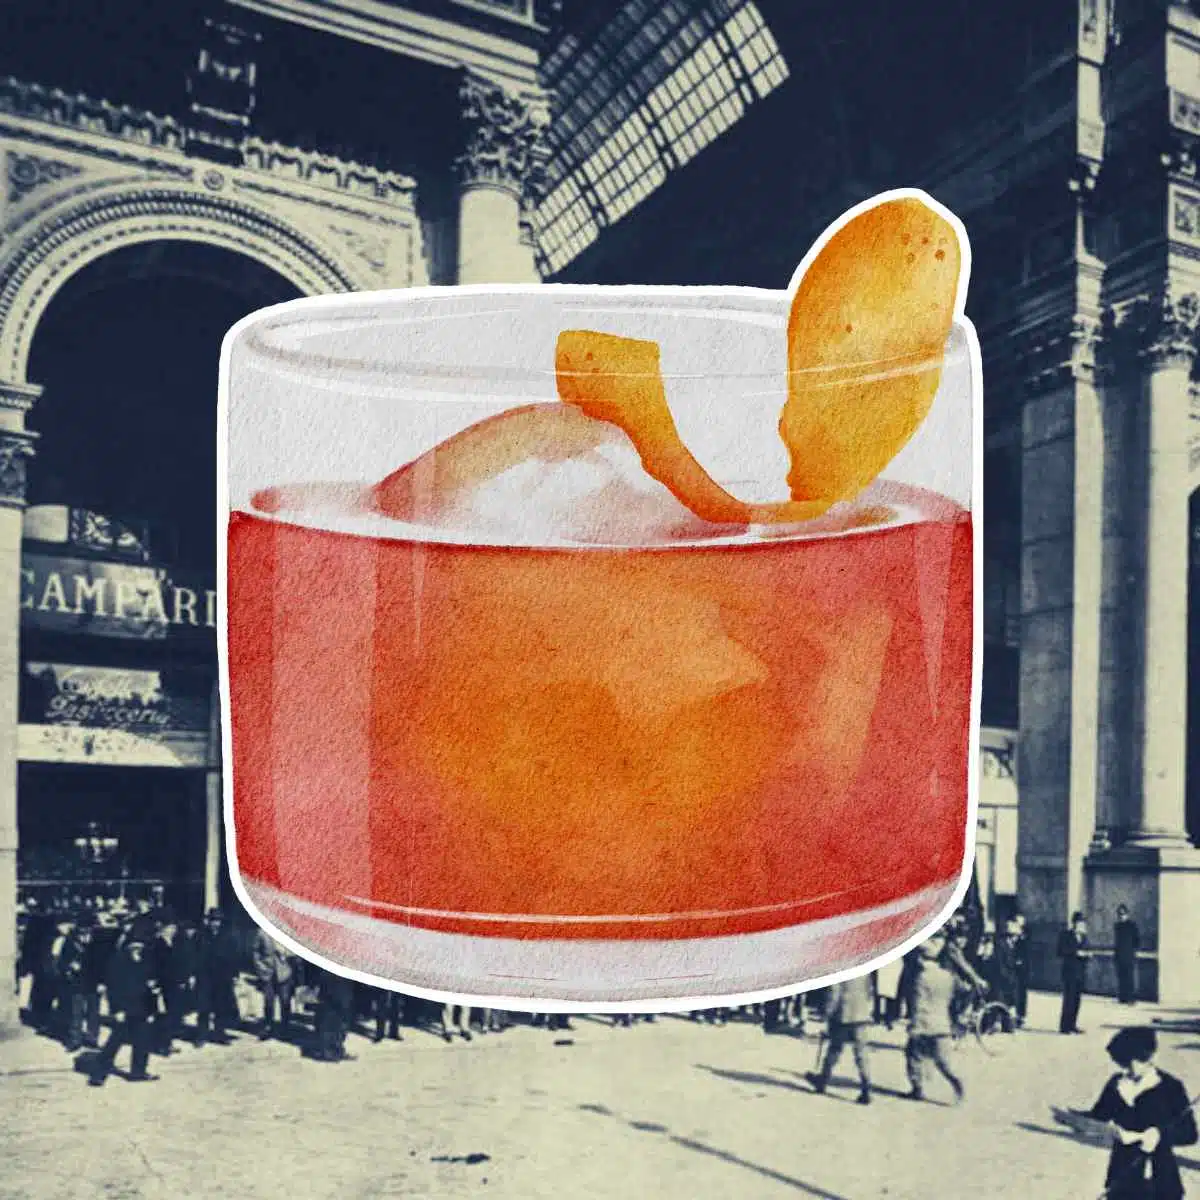 Historic Negroni cocktail - Caffe Camparino in background